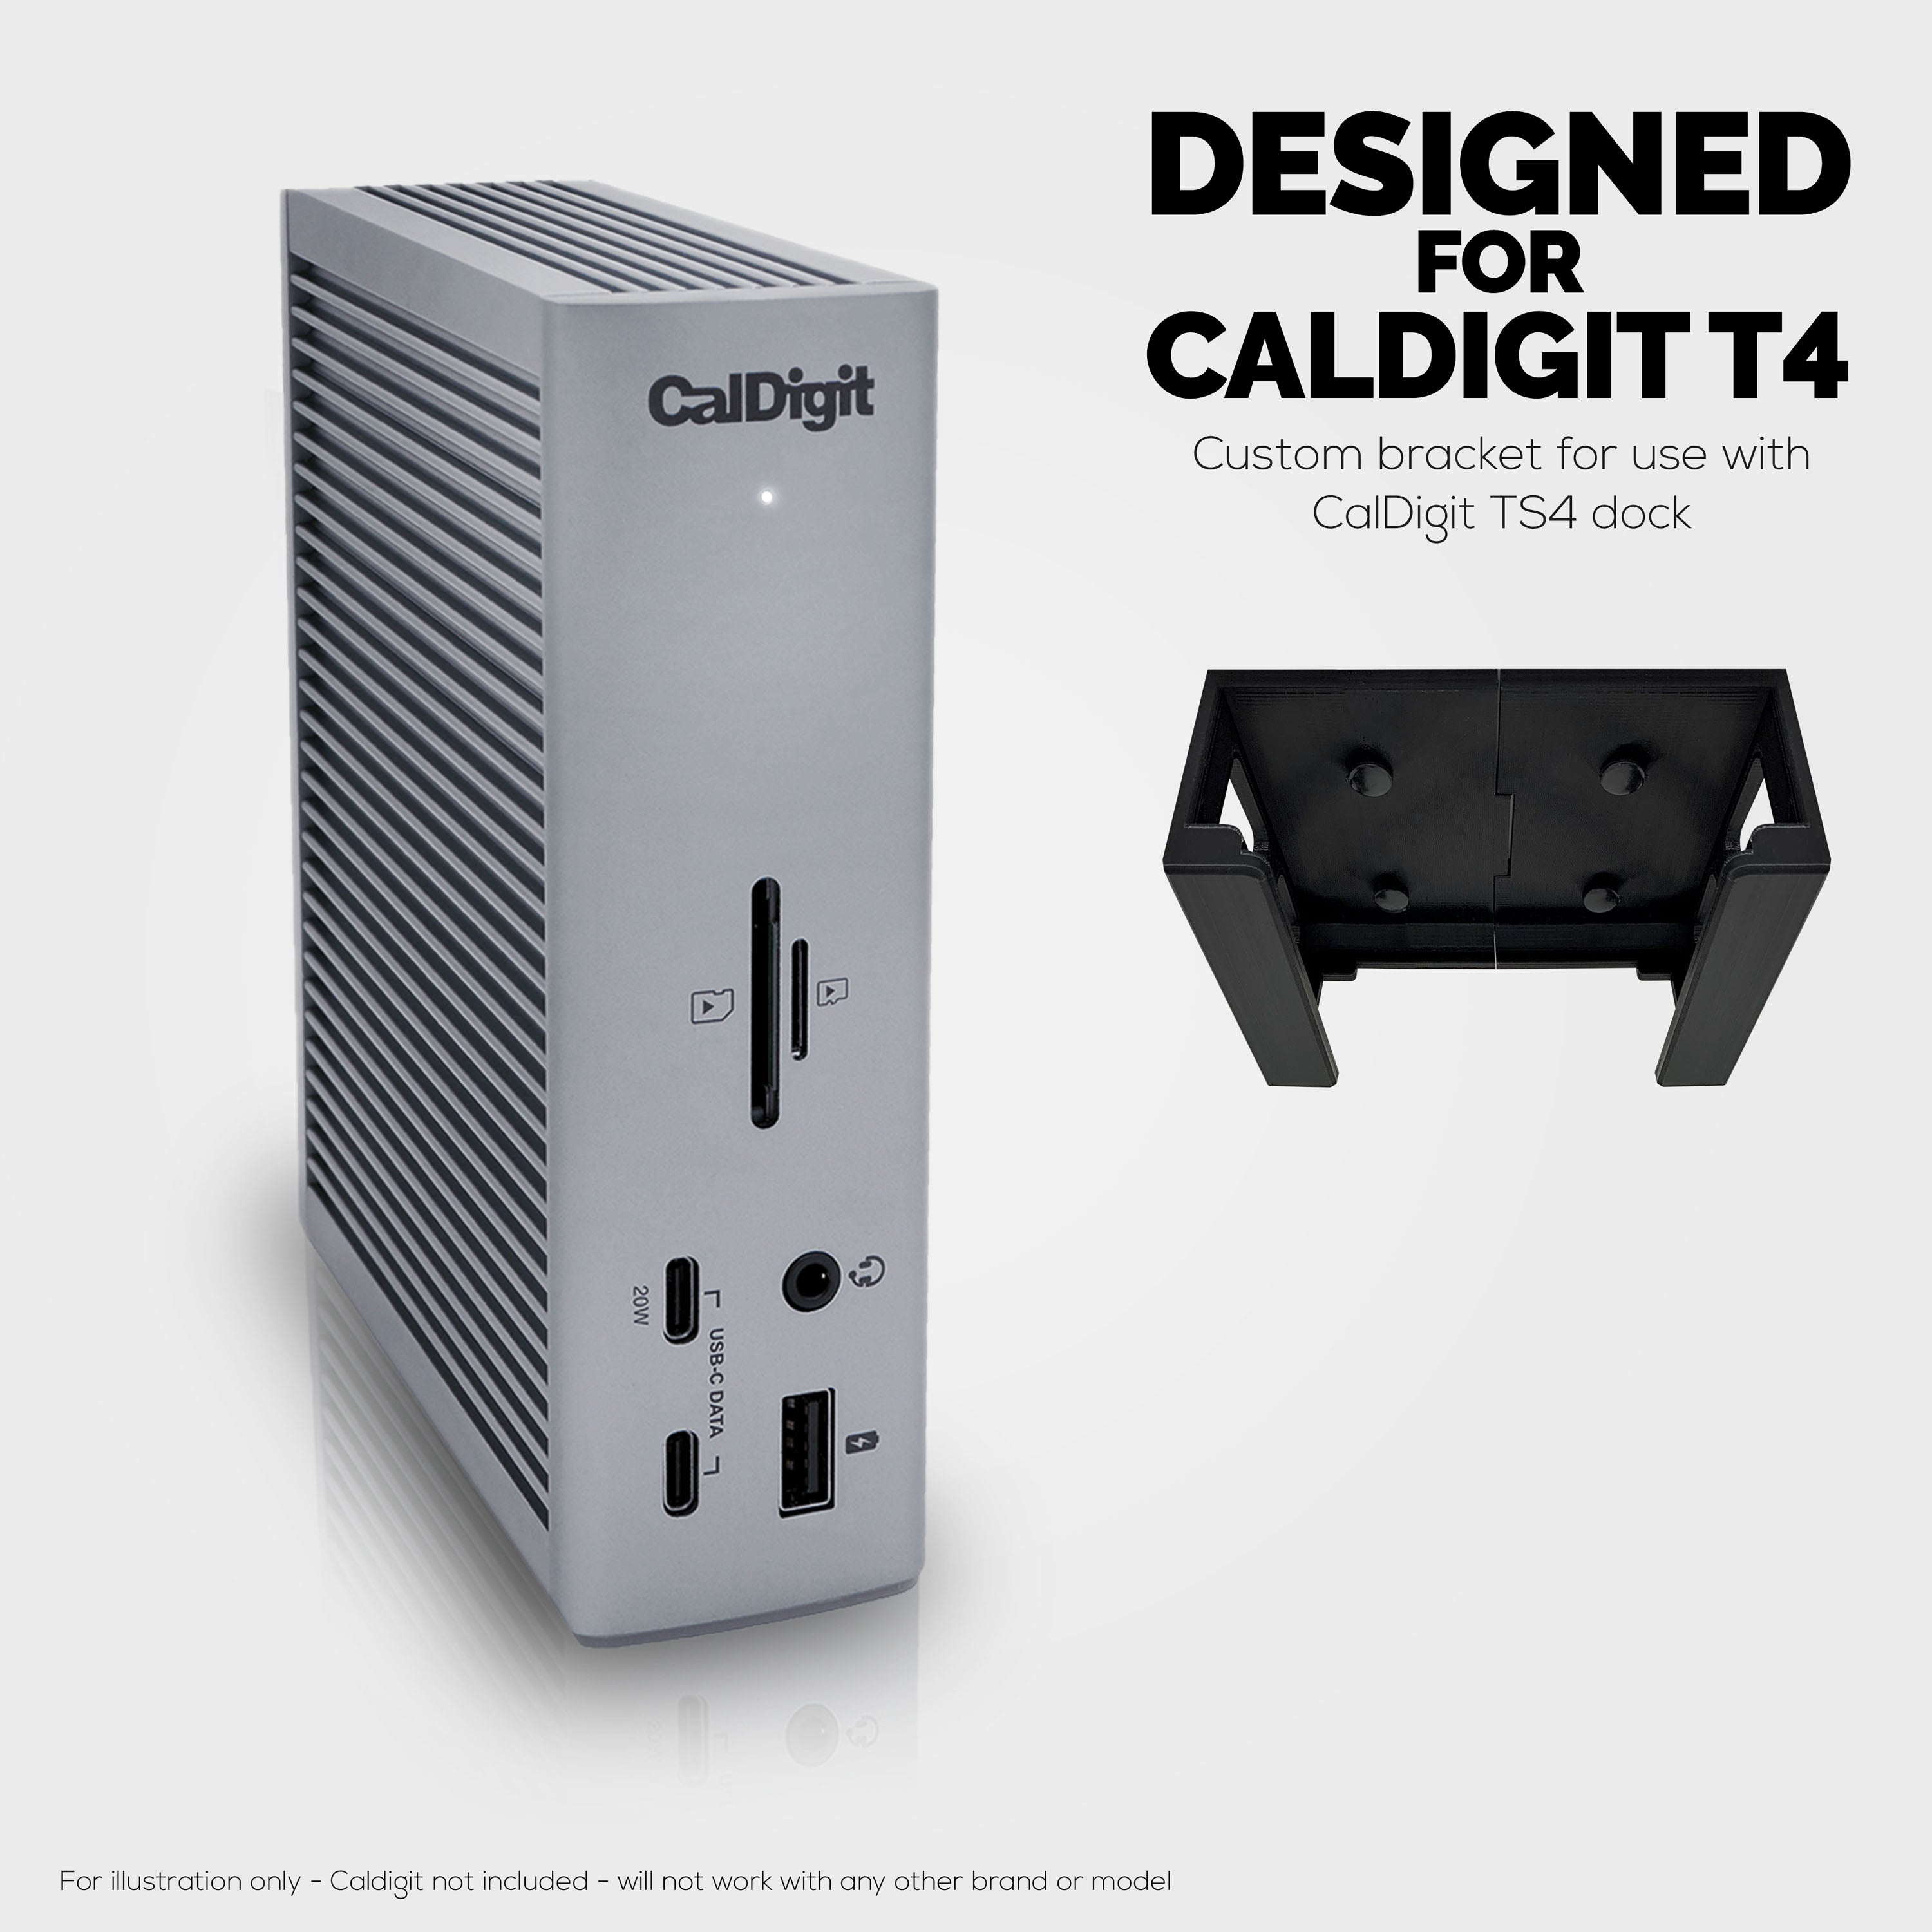 Under Desk Mounting Bracket Compatible with Caldigit TS4 Thunderbolt  Station 4 - Brainwavz Audio